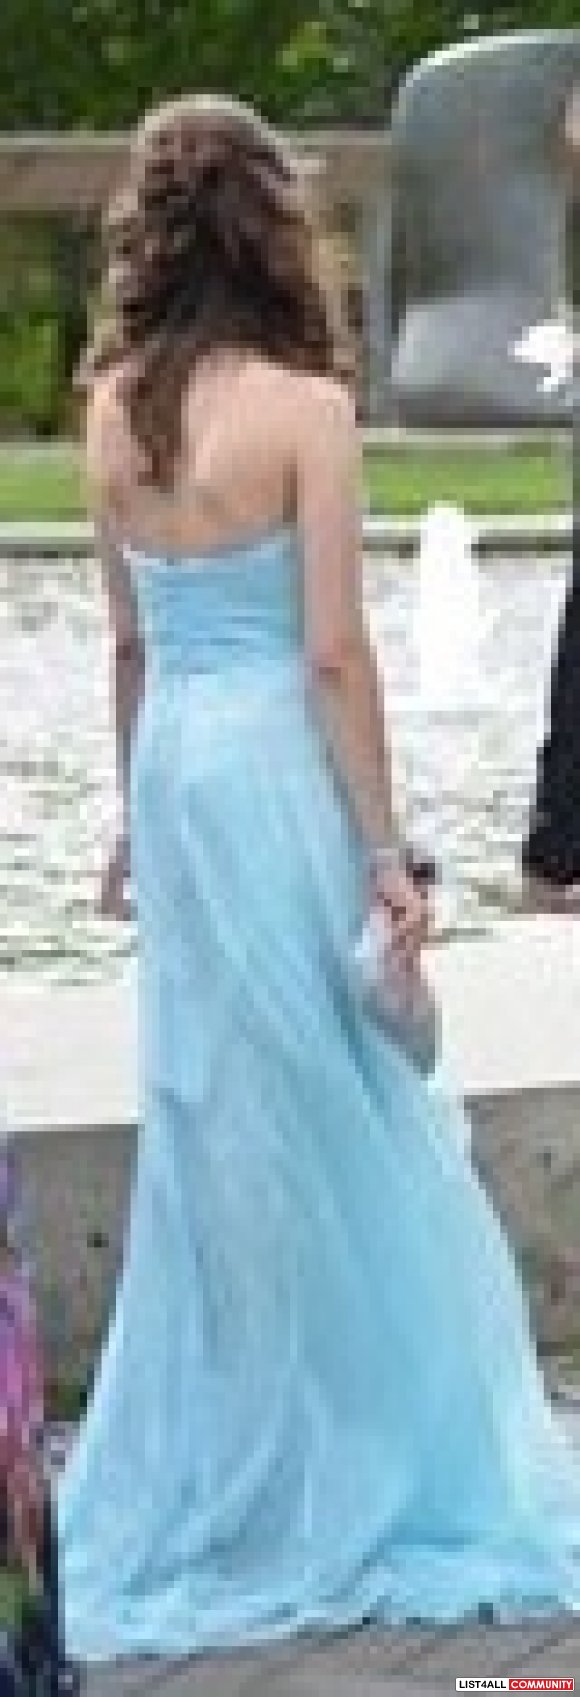 MacDuggal Prom Dress (Baby Blue) - Size 4